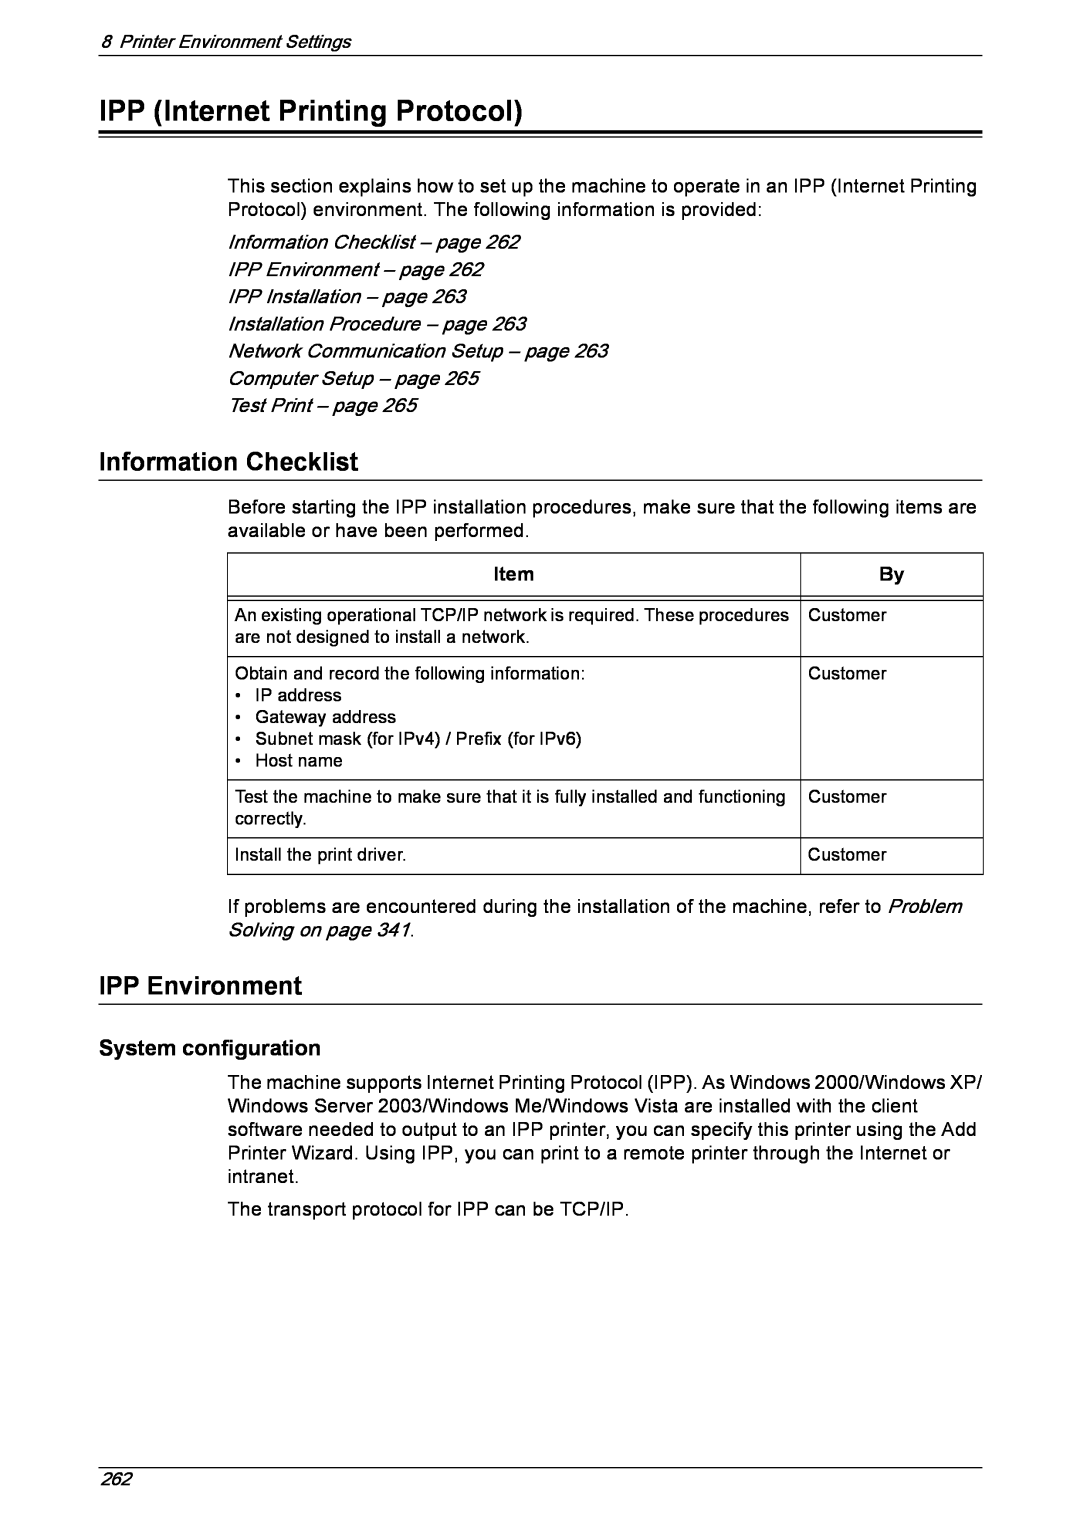 Xerox 5222 manual IPP Internet Printing Protocol, IPP Environment, Information Checklist – page, Item 